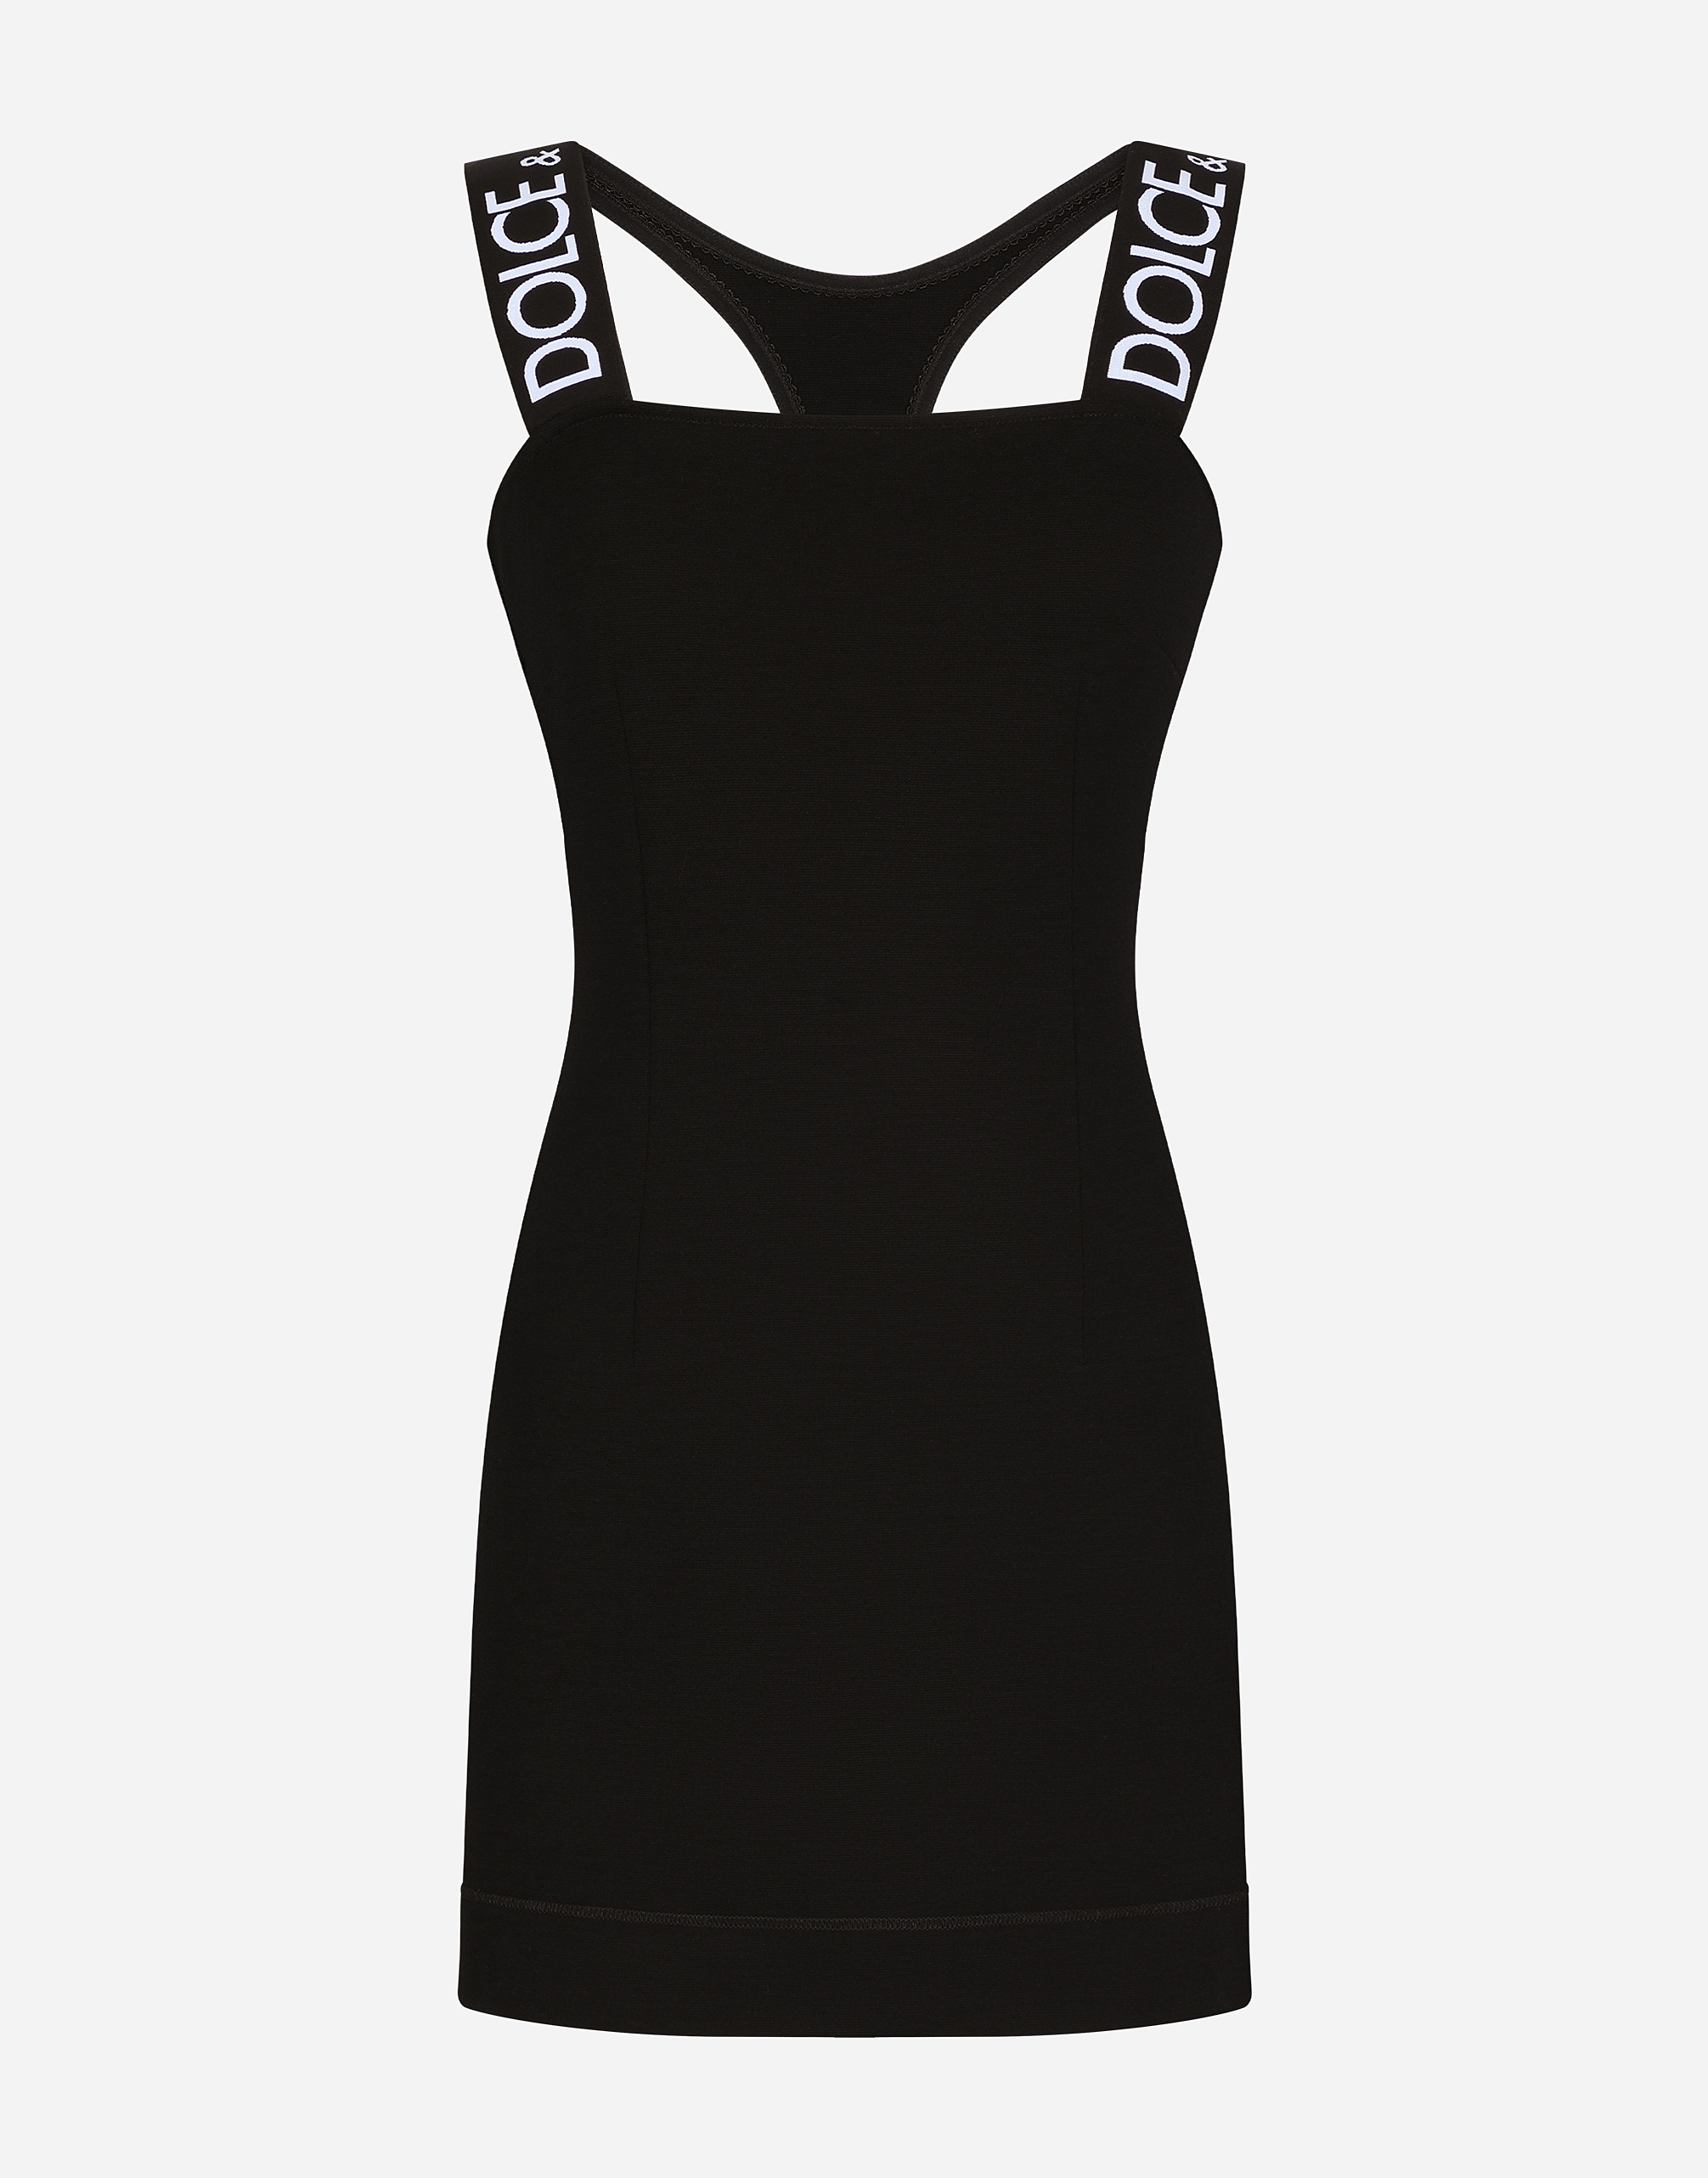 Short full Milano dress with branded straps in Black